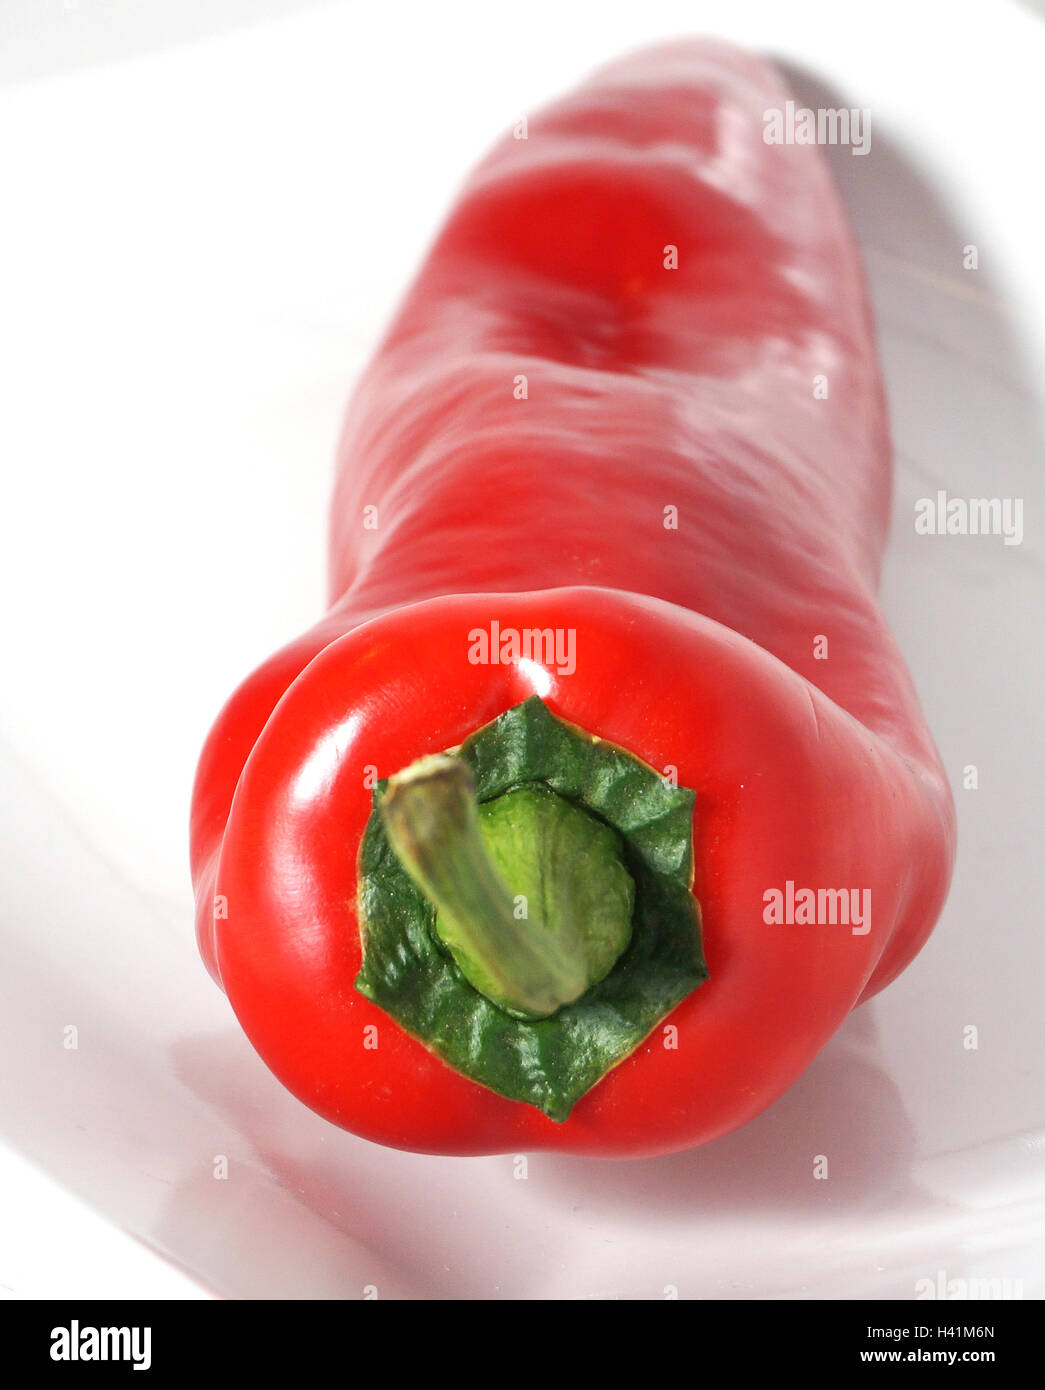 The red pepper Ramiro. Stock Photo